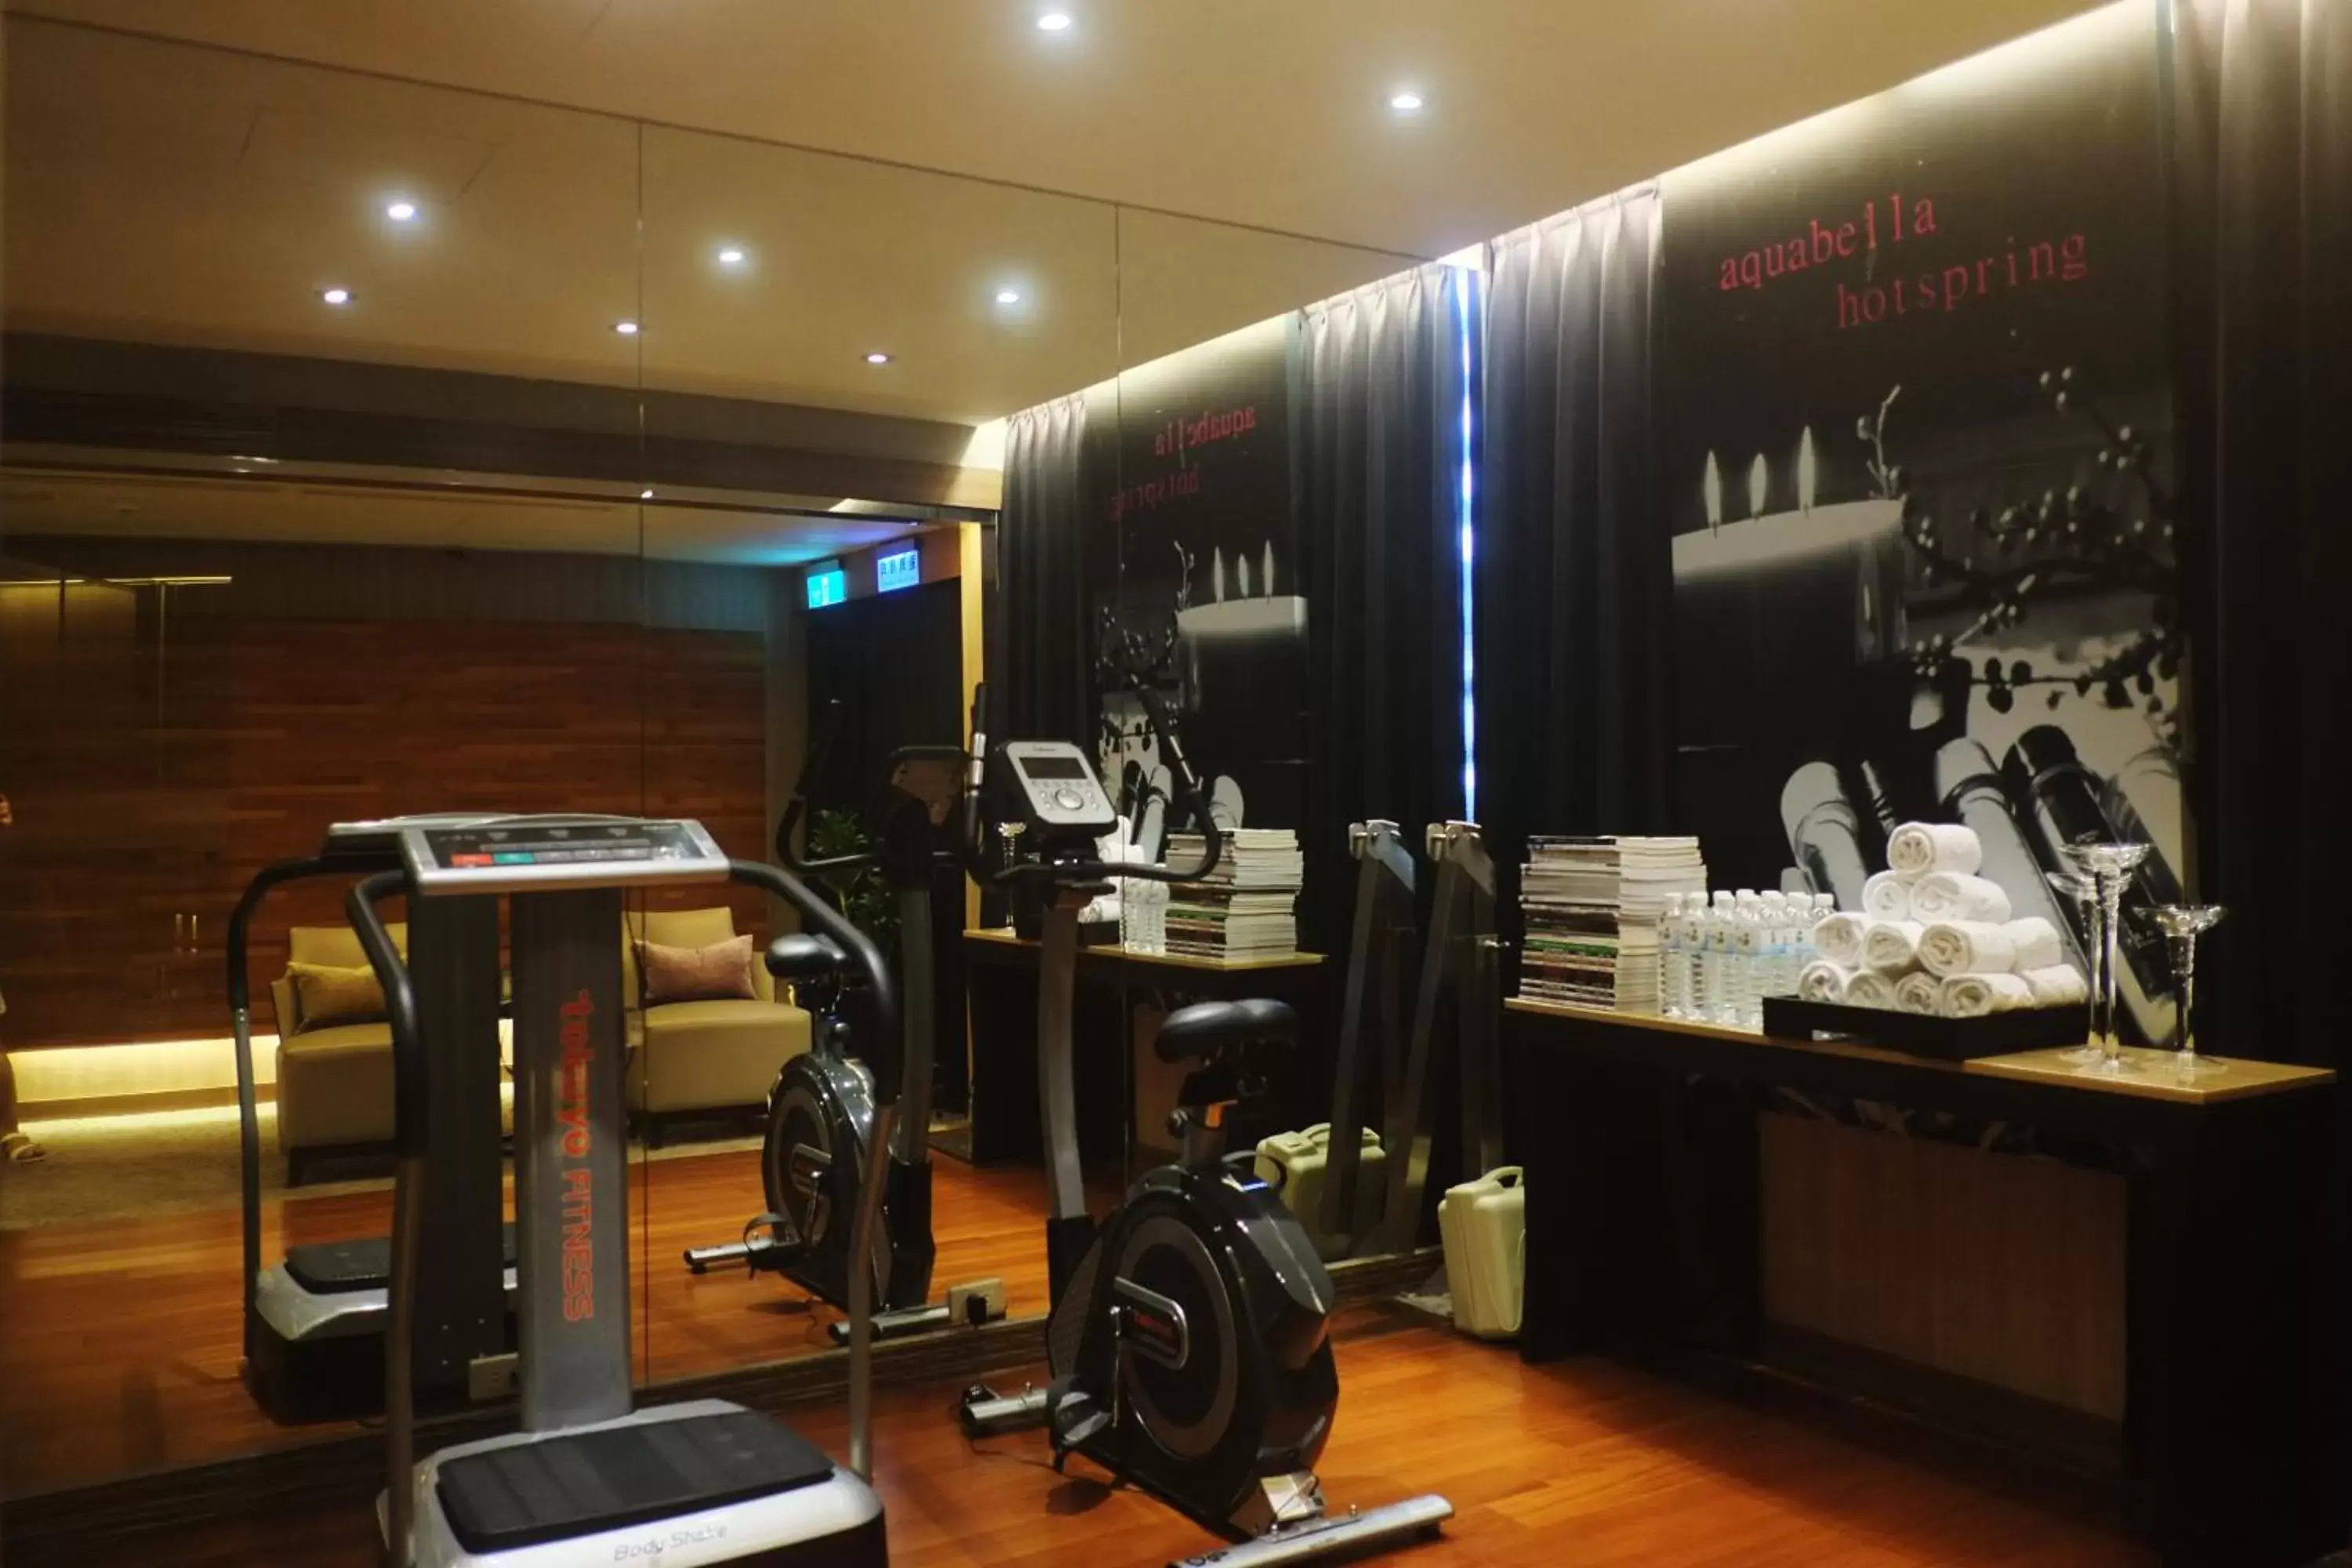 Fitness centre/facilities, Fitness Center/Facilities in Aqua Bella Hotel